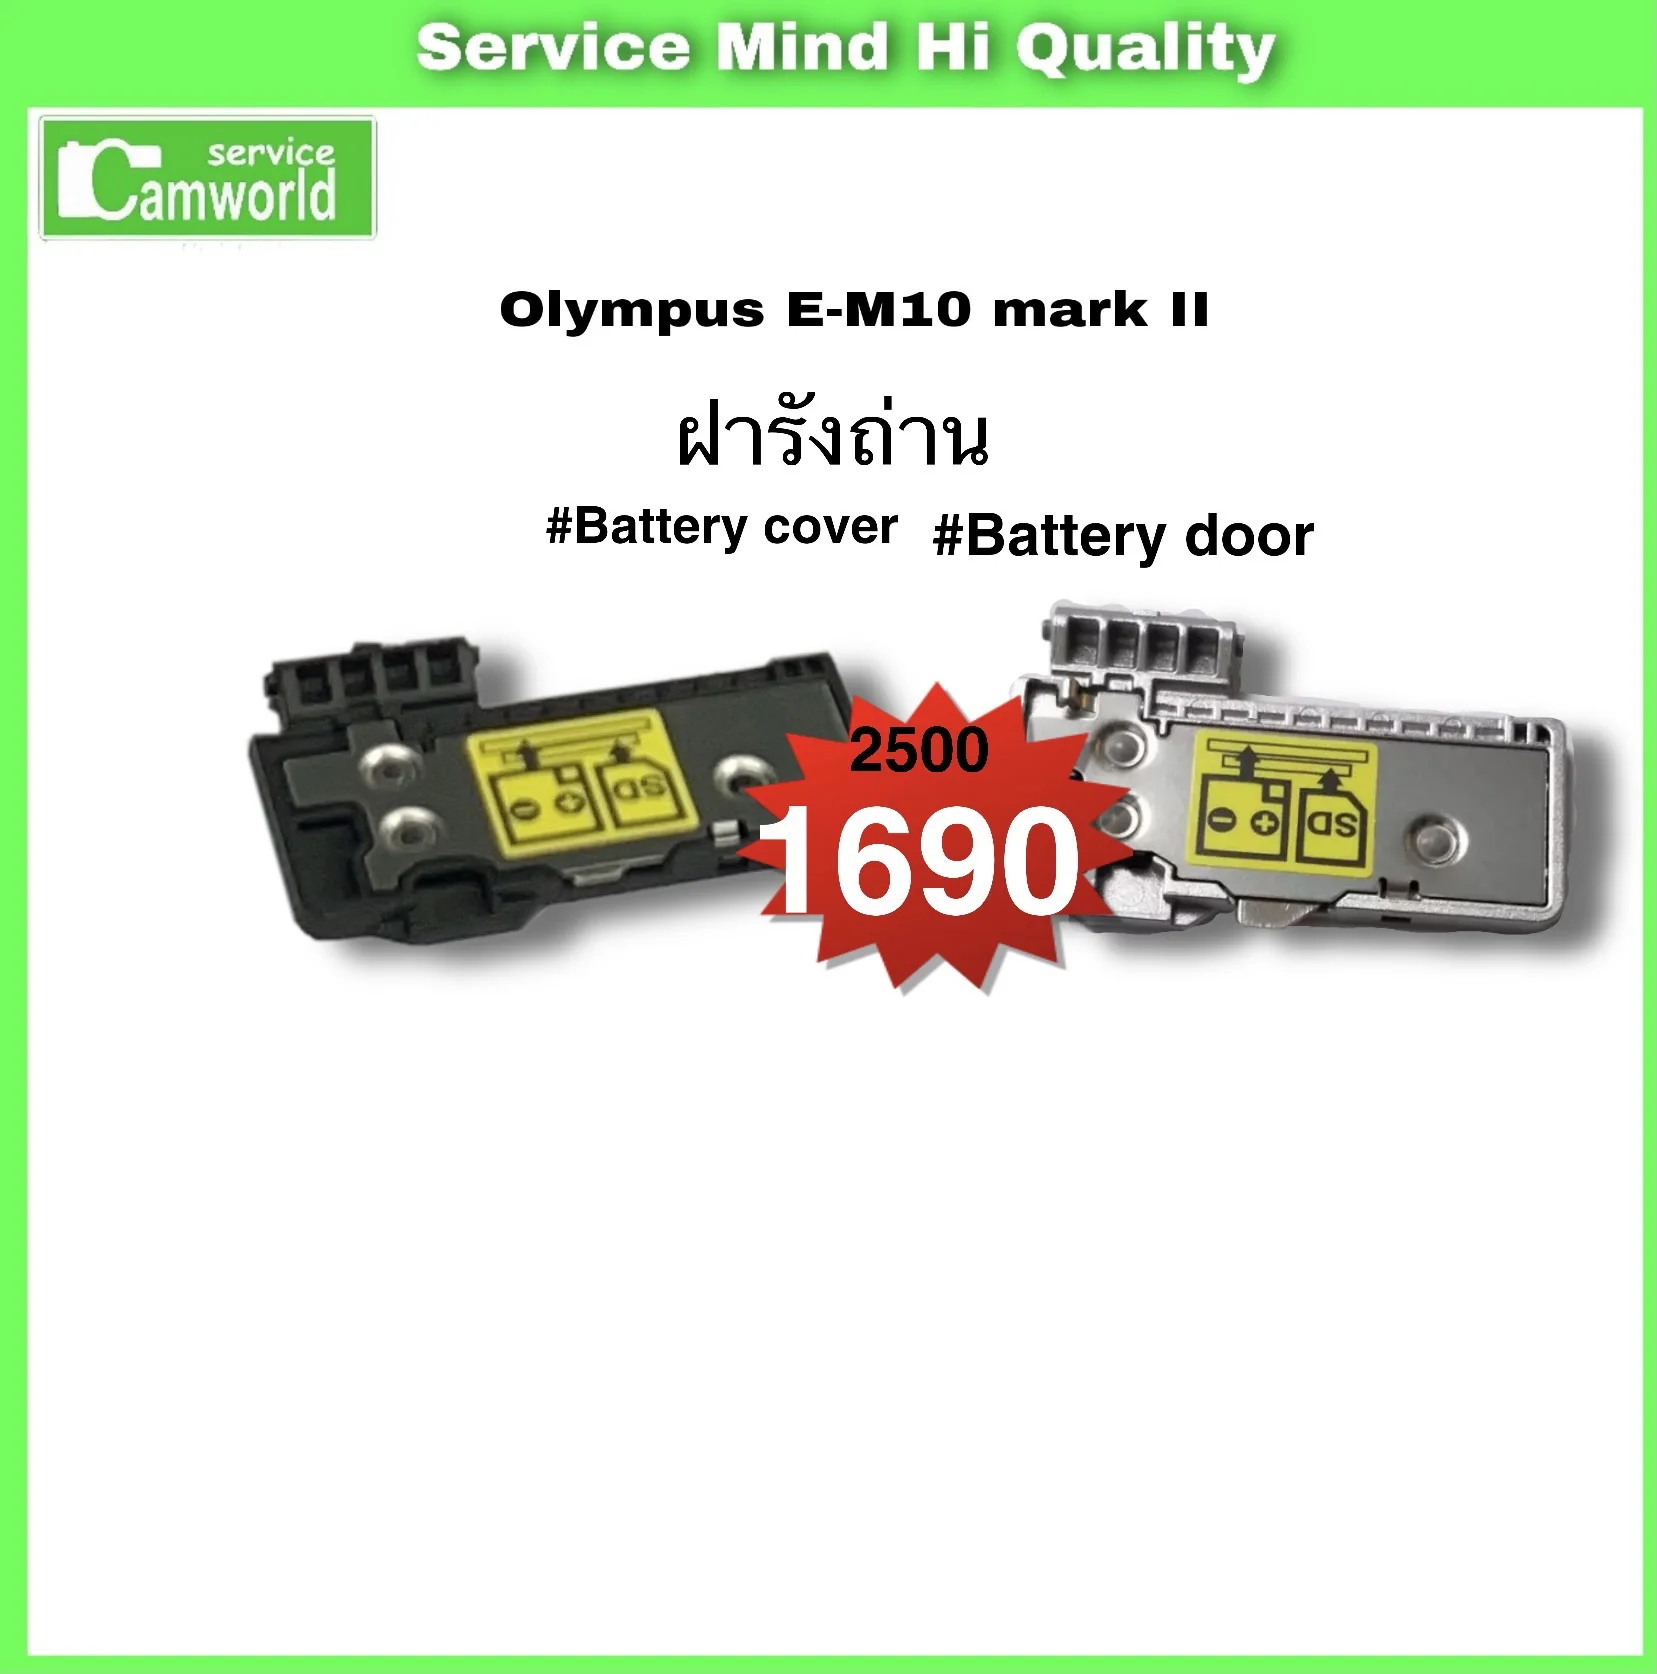 Olympus E-M10 mark II ฝารังถ่าน #battery door silver/black color